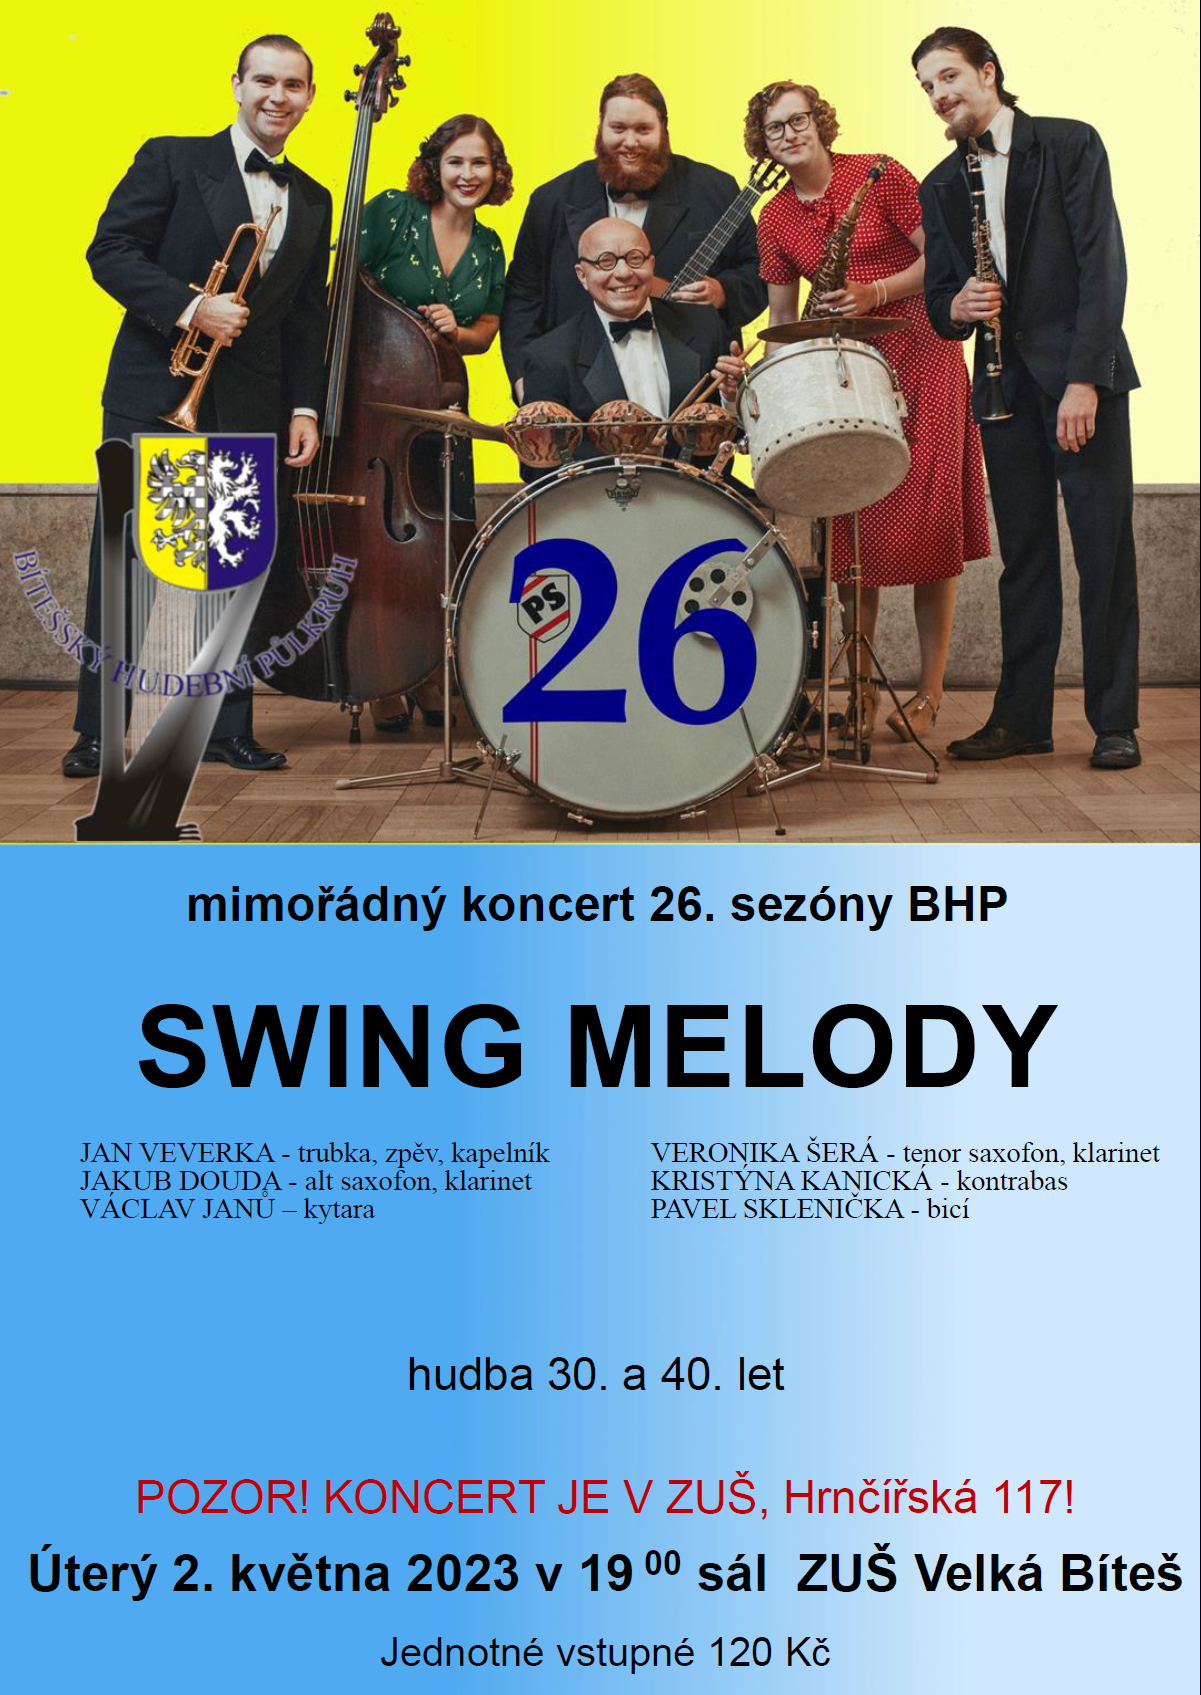 BHP-Swing melody copy